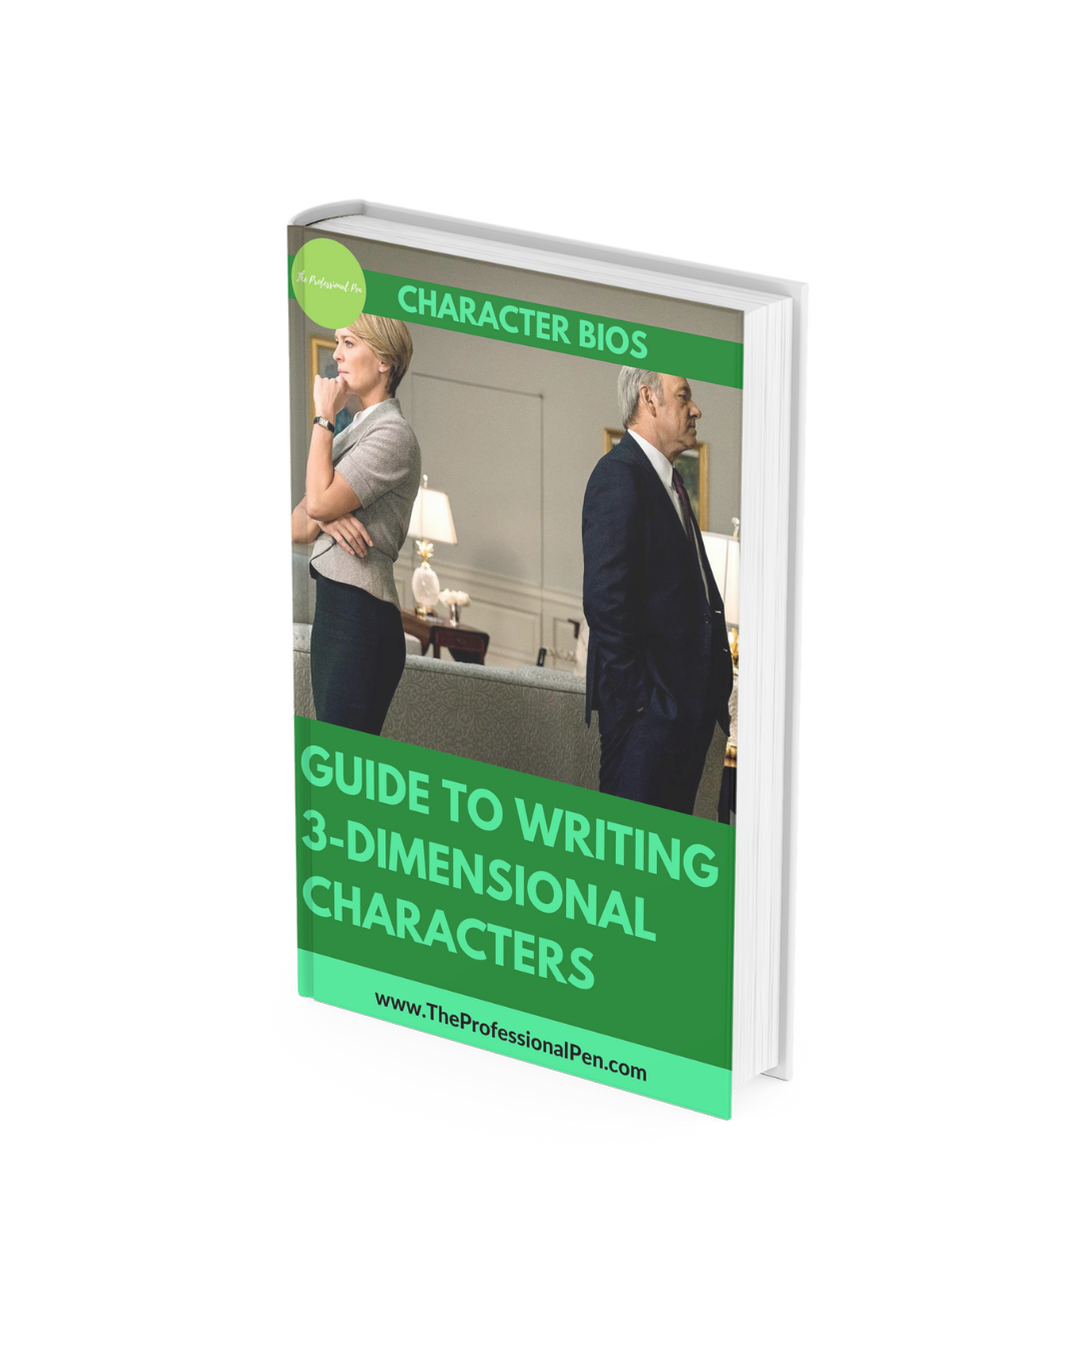 Creating Character Bios Workbook